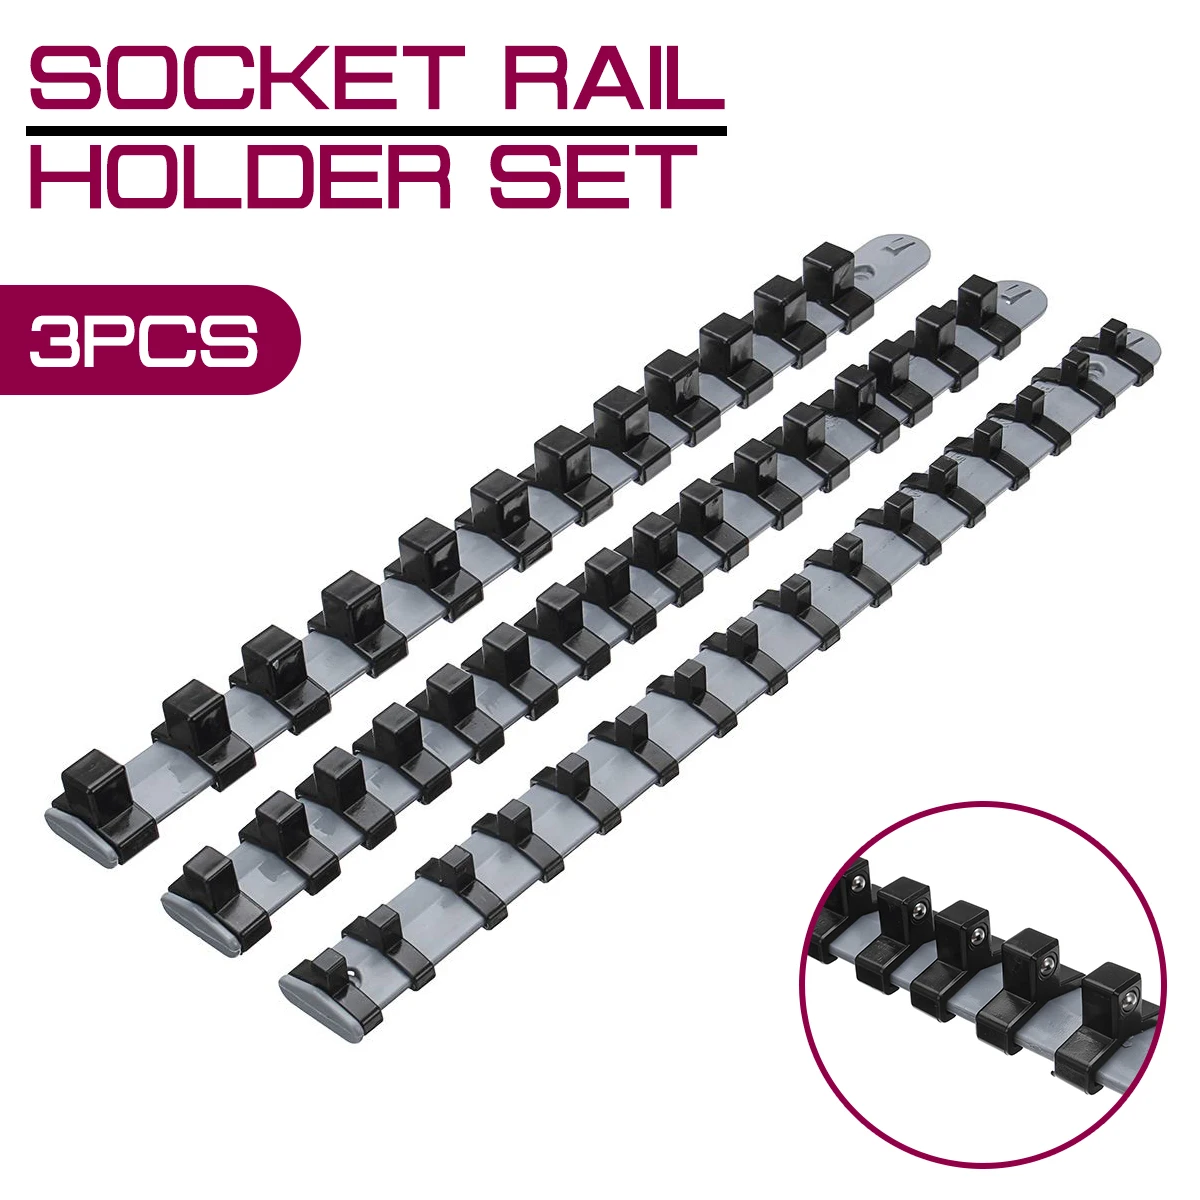 

3Pcs/set Wall Wrench Organizer Socket Rack Storage Drive 1/4" 3/8" 1/2" Rail Tray Holder Shelf Stand 34cm Dropshipping